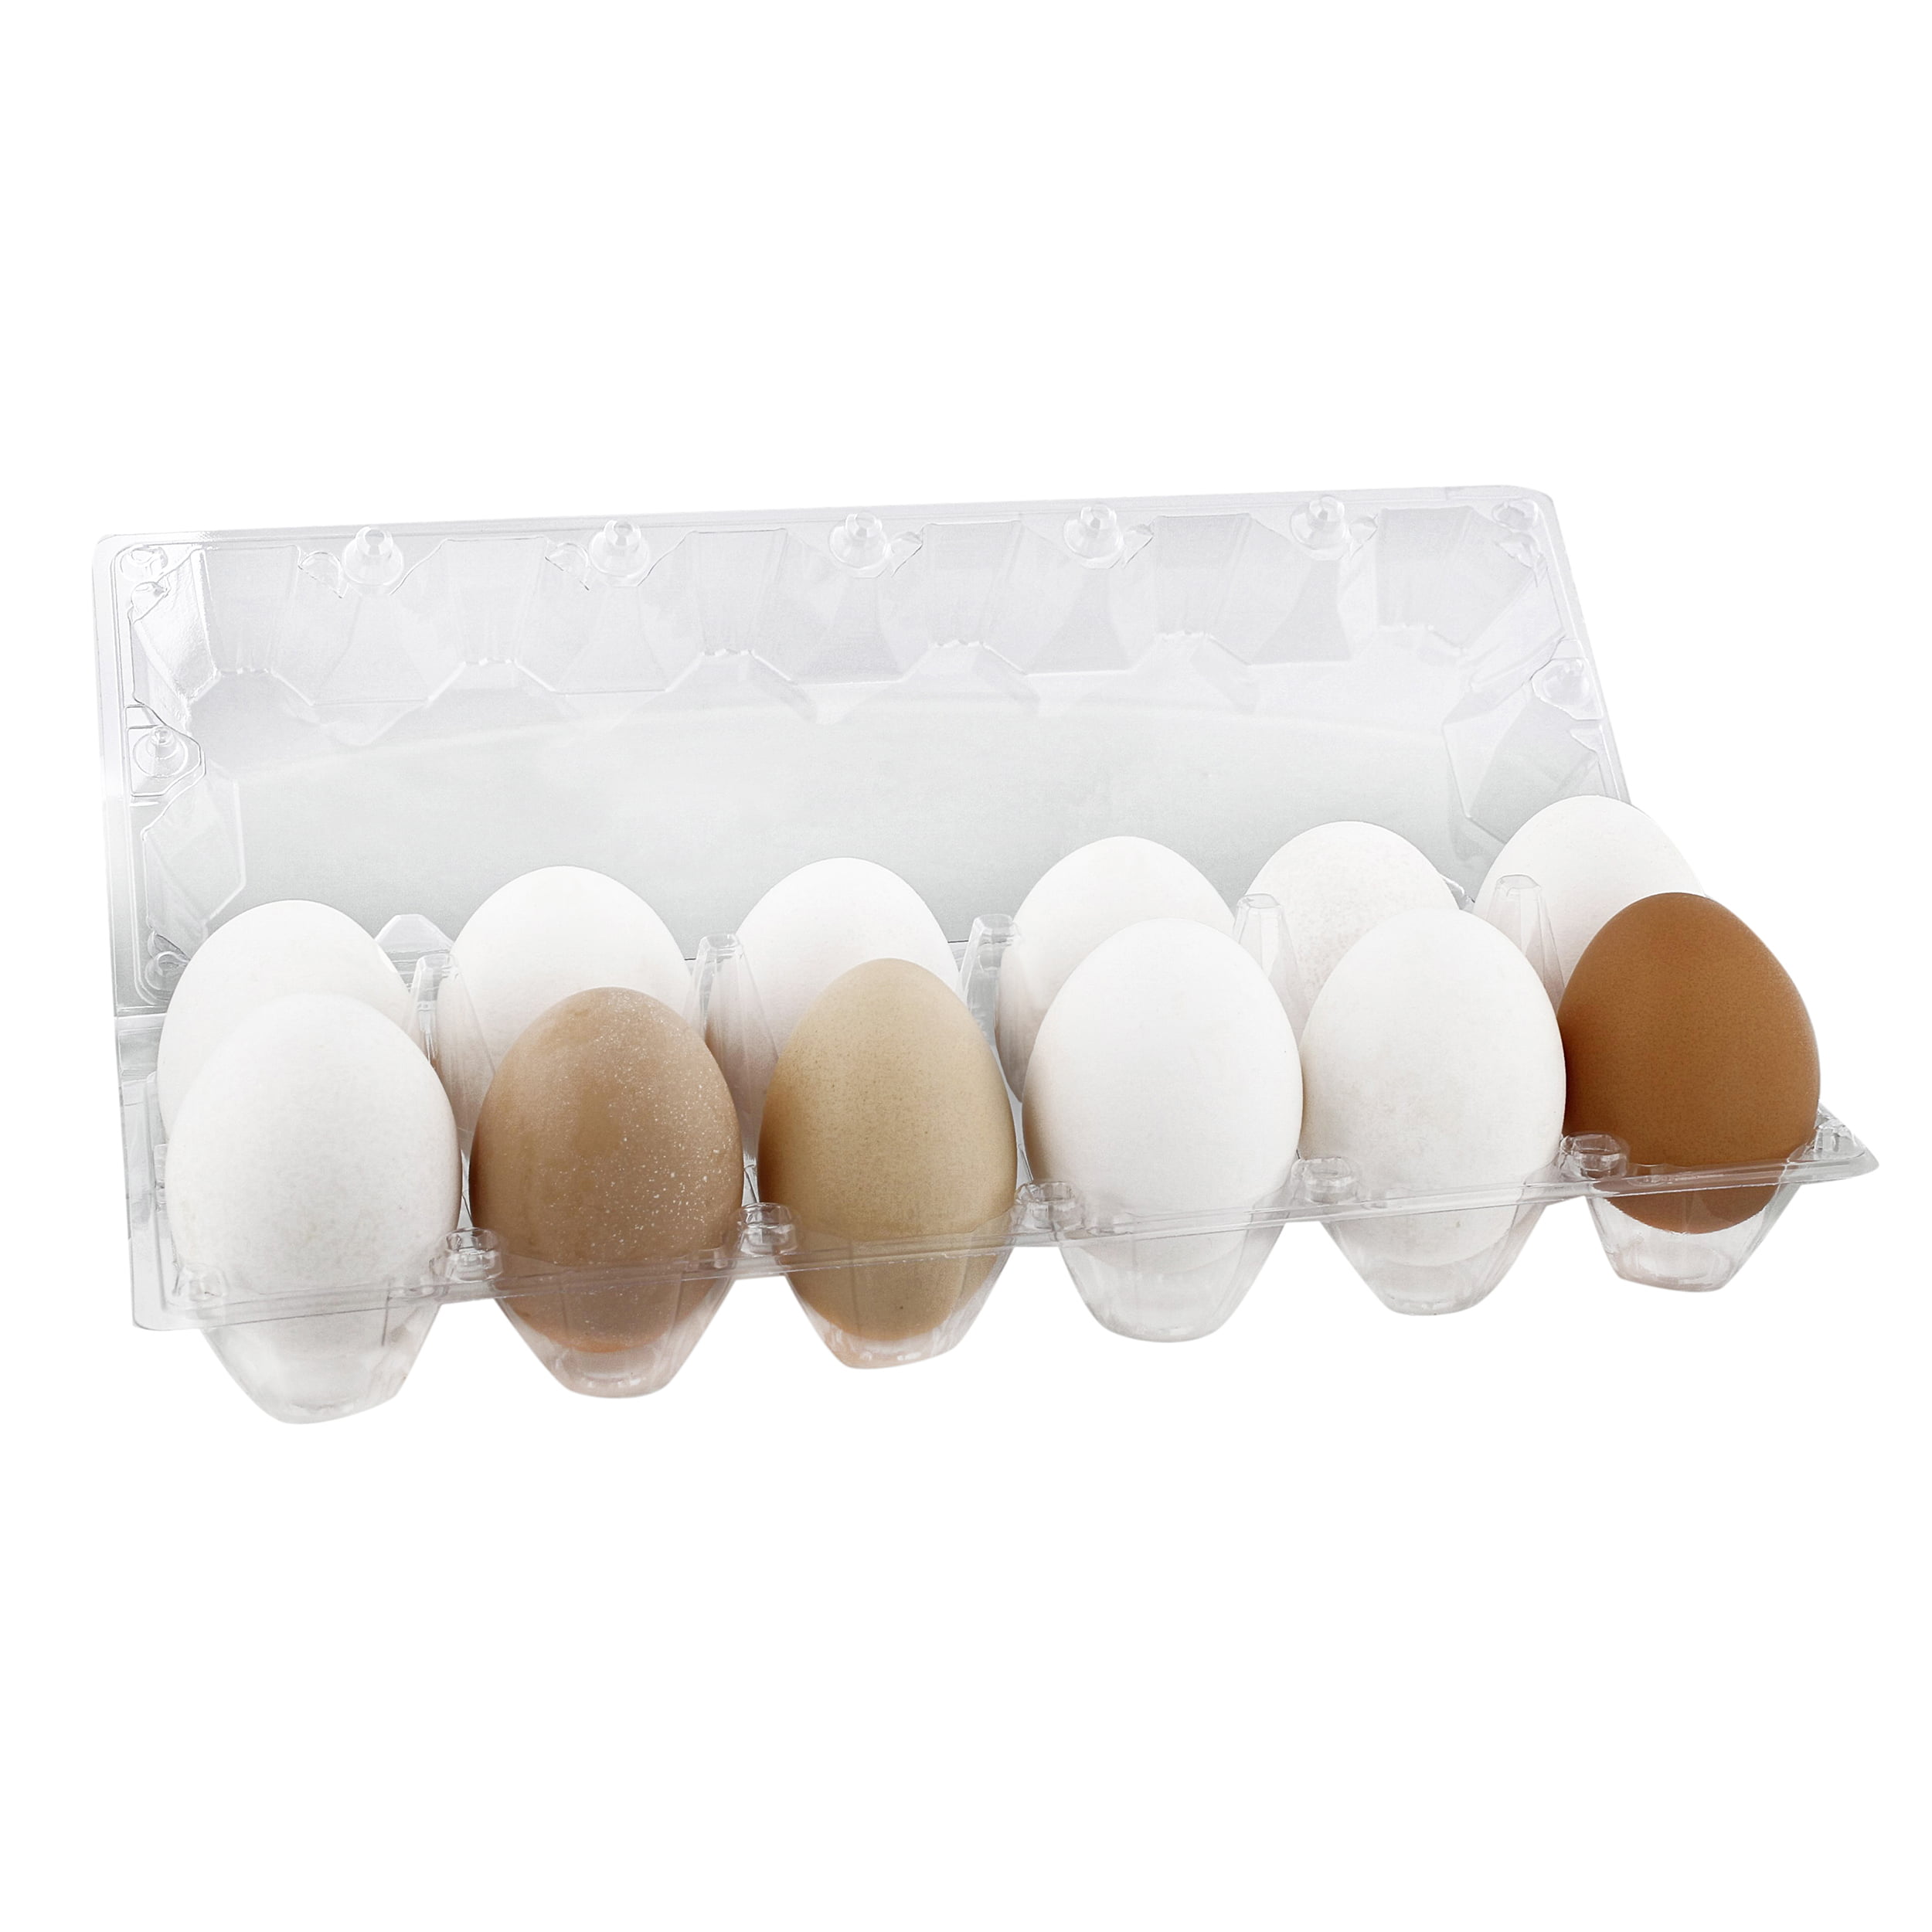 24Pcs Plastic Egg Cartons Clear Chicken Egg Tray Holder for Family